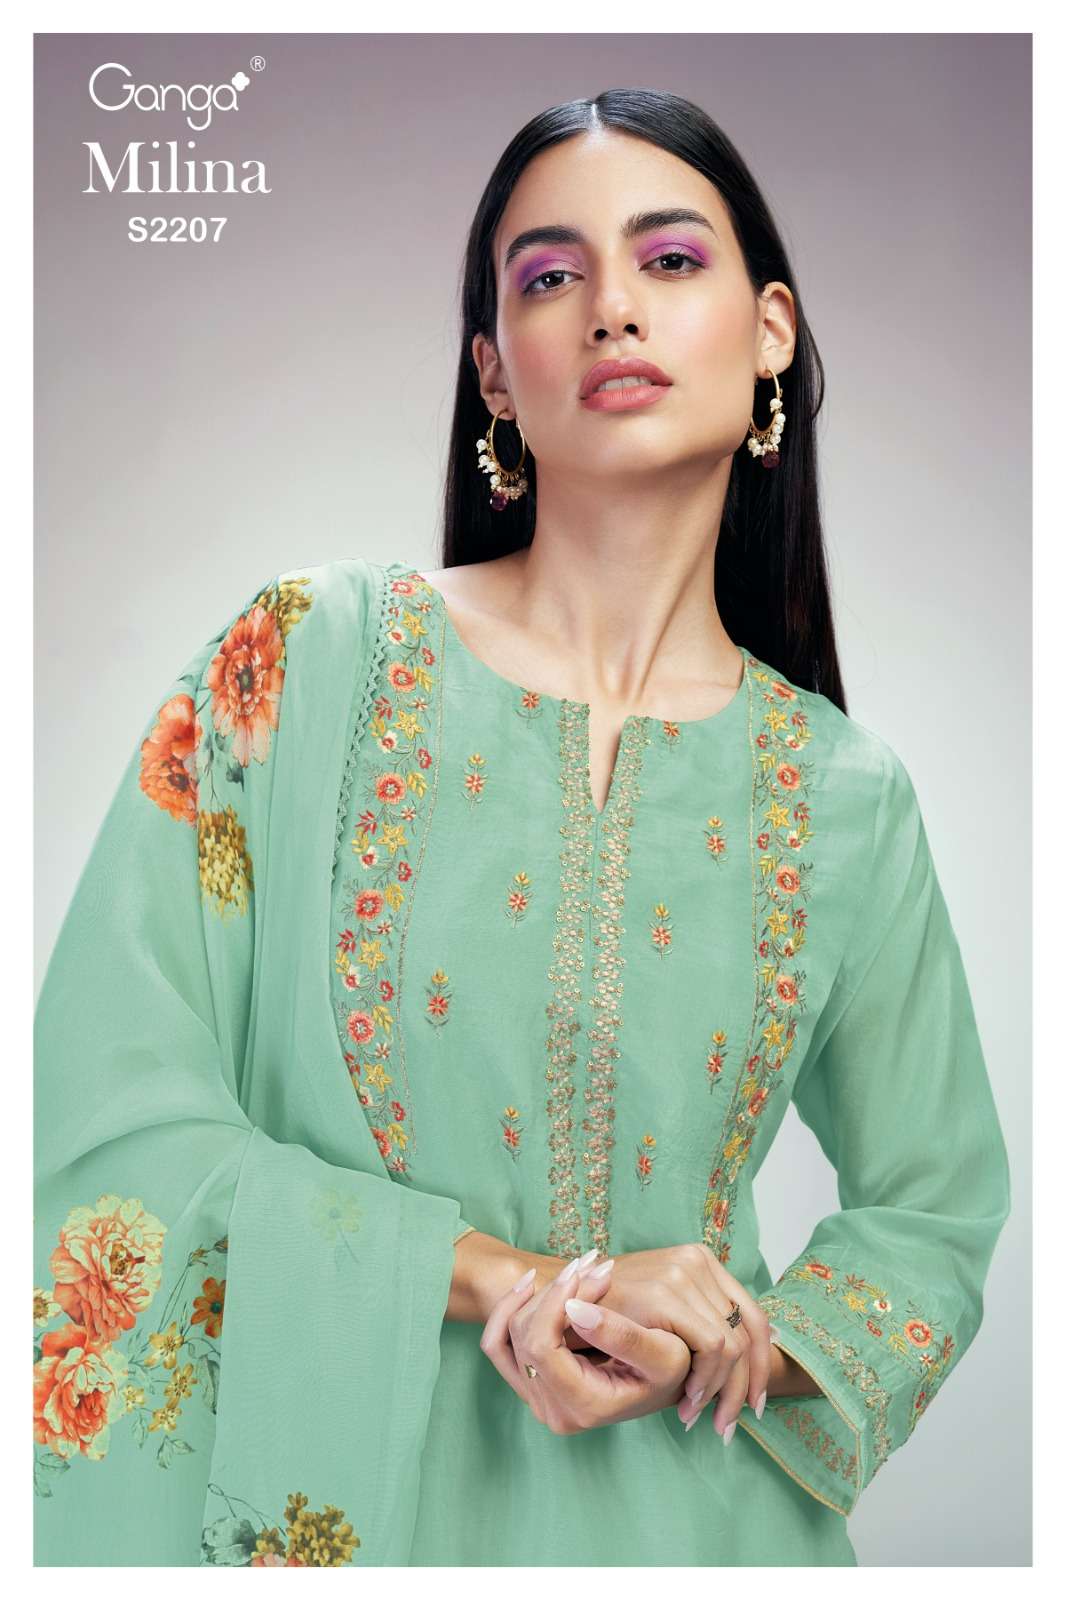 Ganga Milina 2207 Fancy Habutai Silk Exclusive Dress Catalog Suppliers